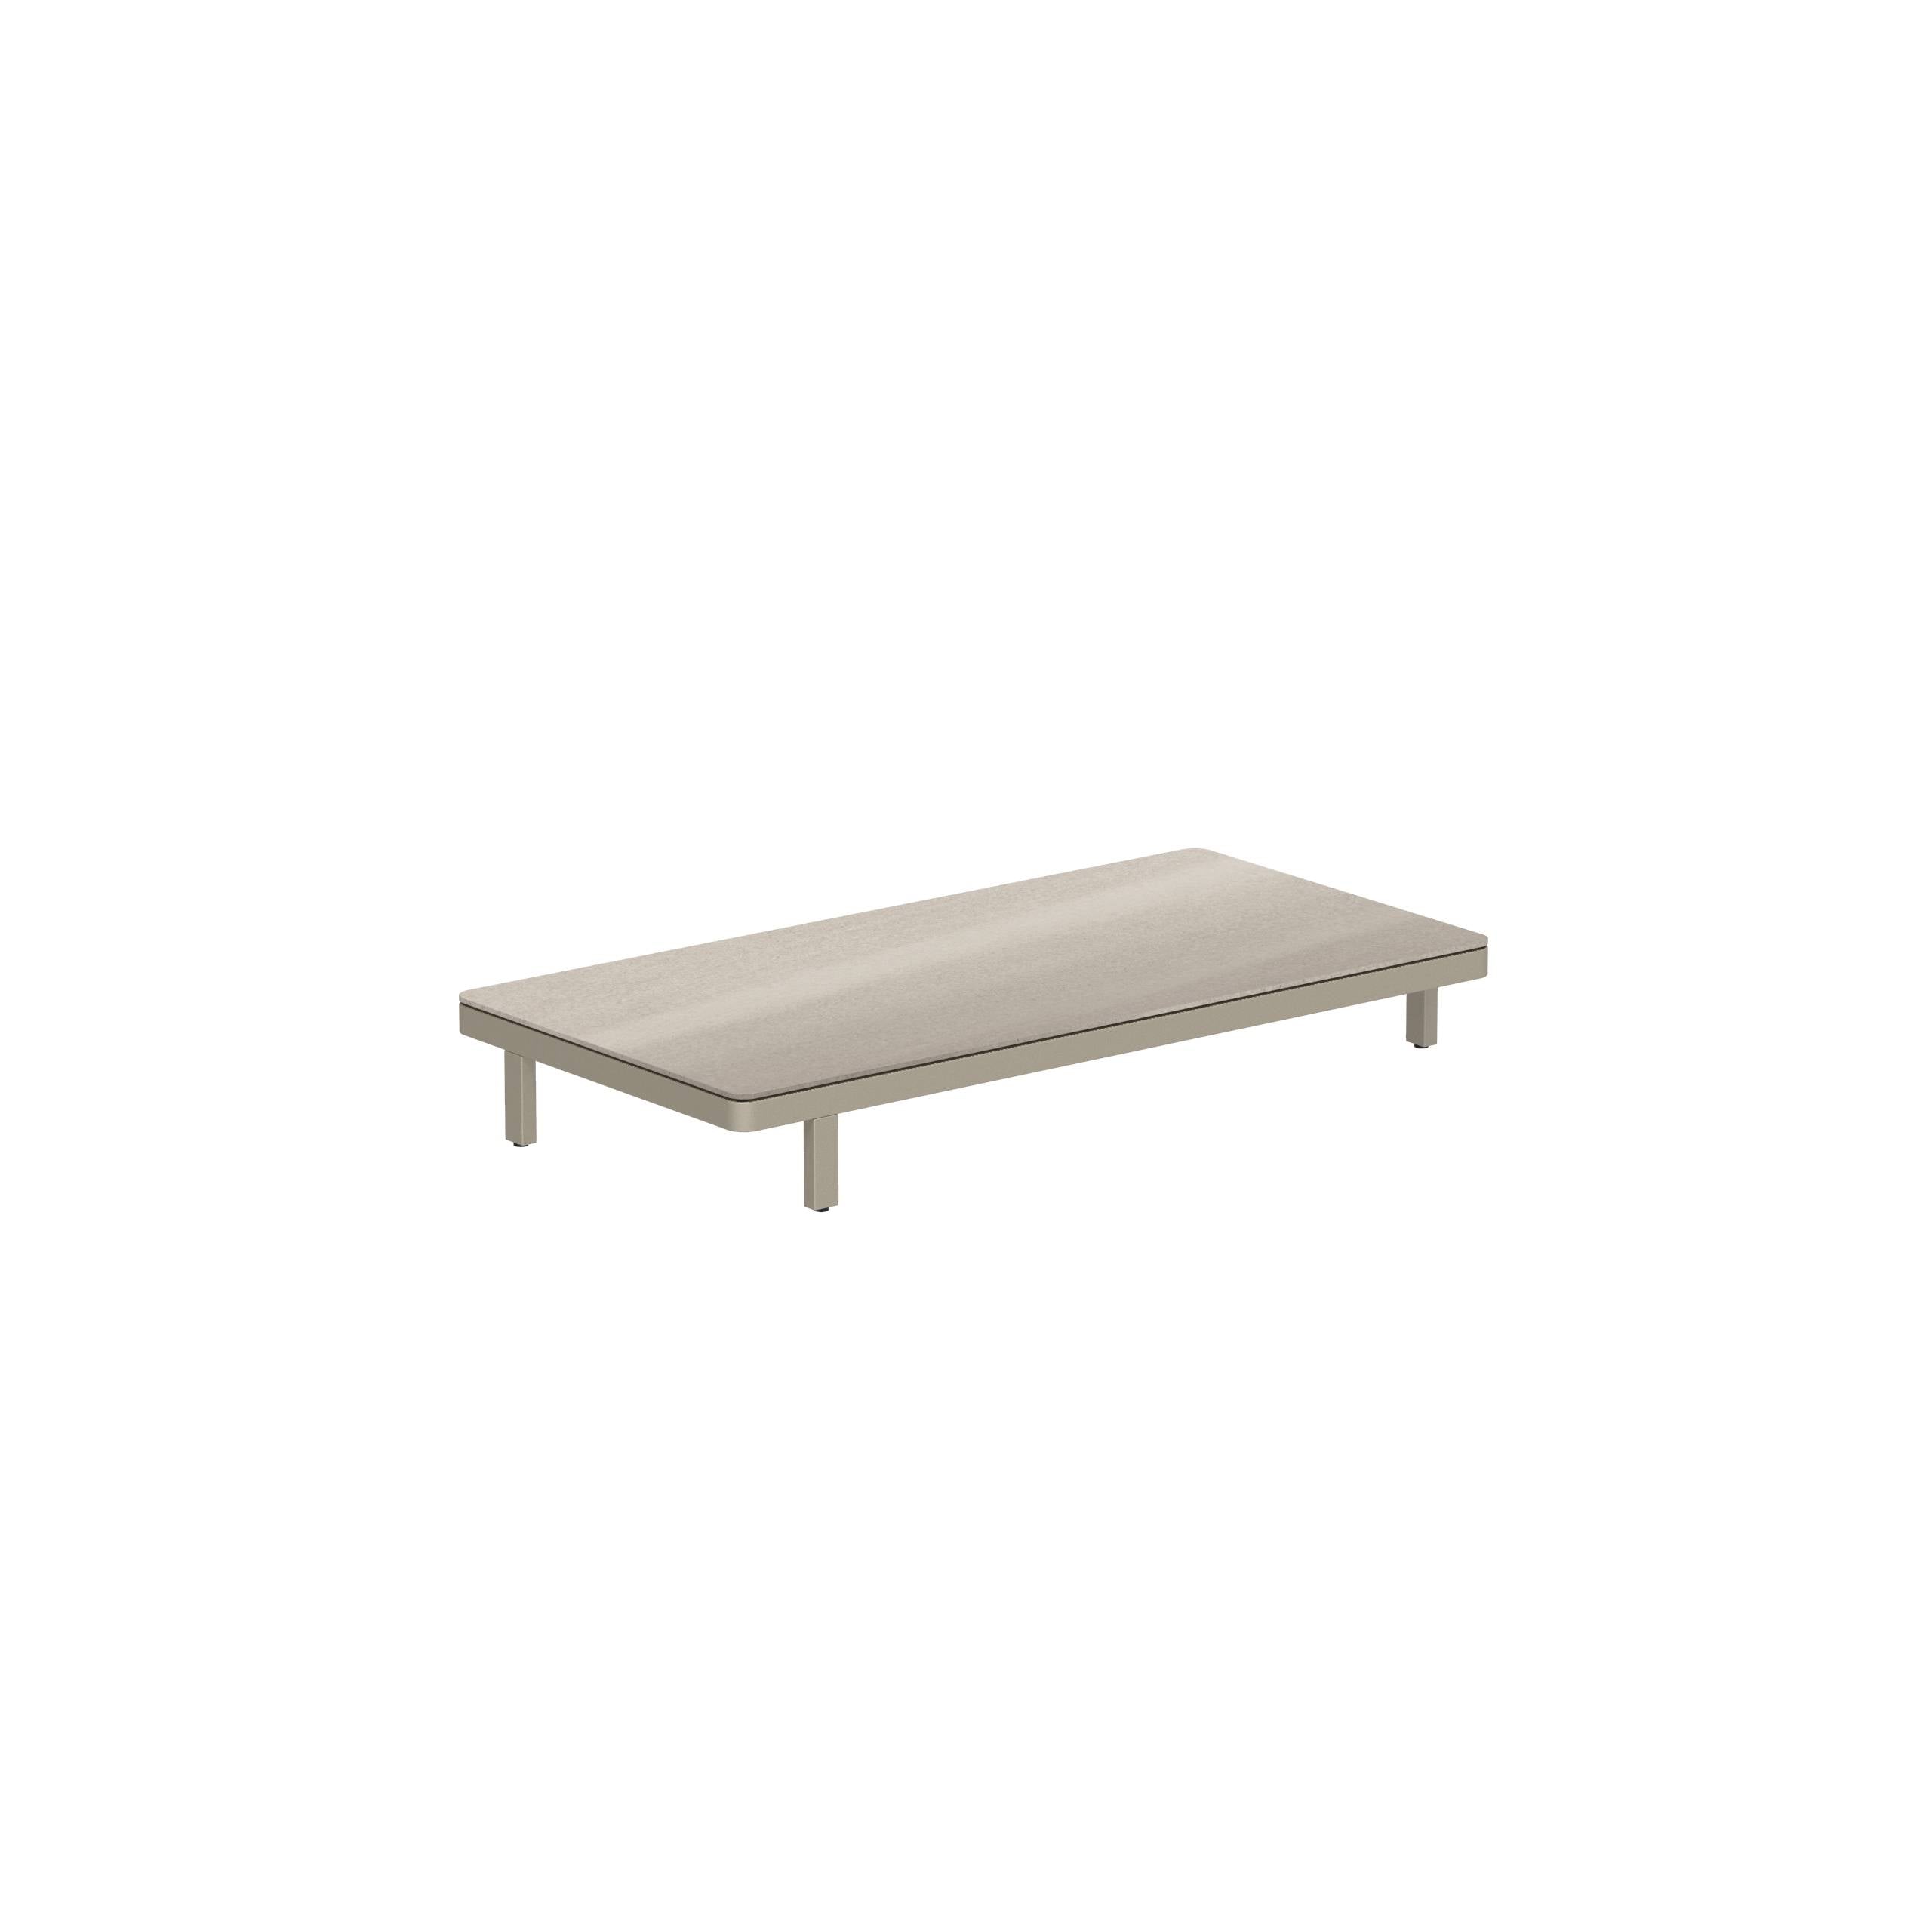 Alura Lounge 160 Ltl Table 160x80x23cm Sand Ceramic Tabletop Taupe Grey